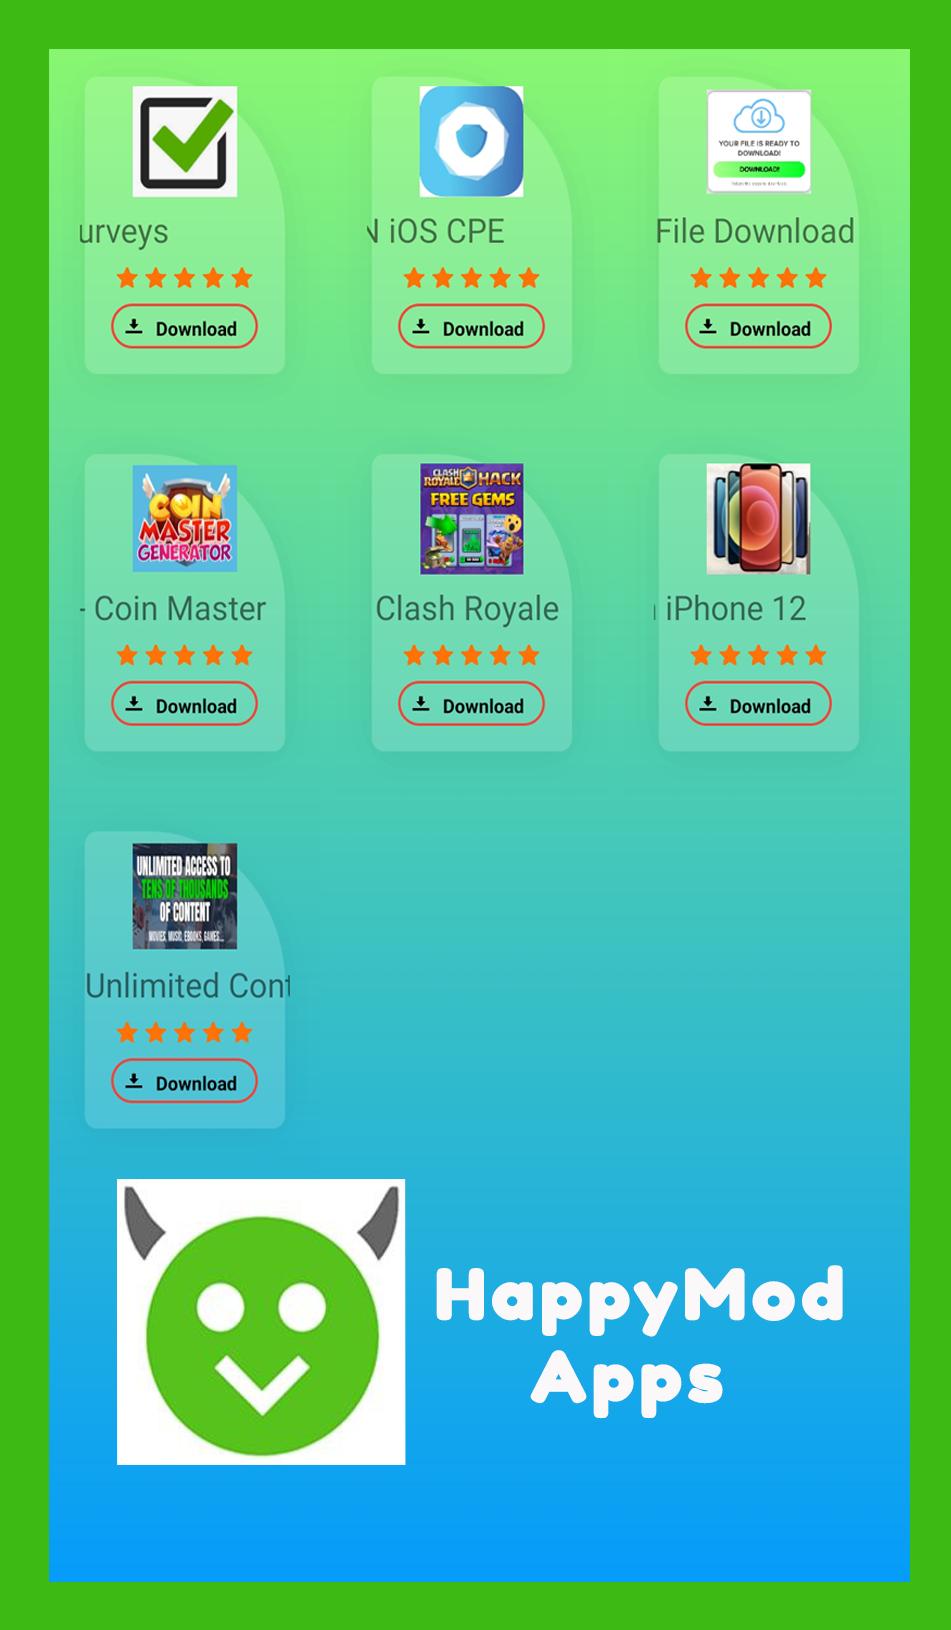 HappyMod: New Happy Apps - Tips For Happymod 2021 1.0 Screenshot 1